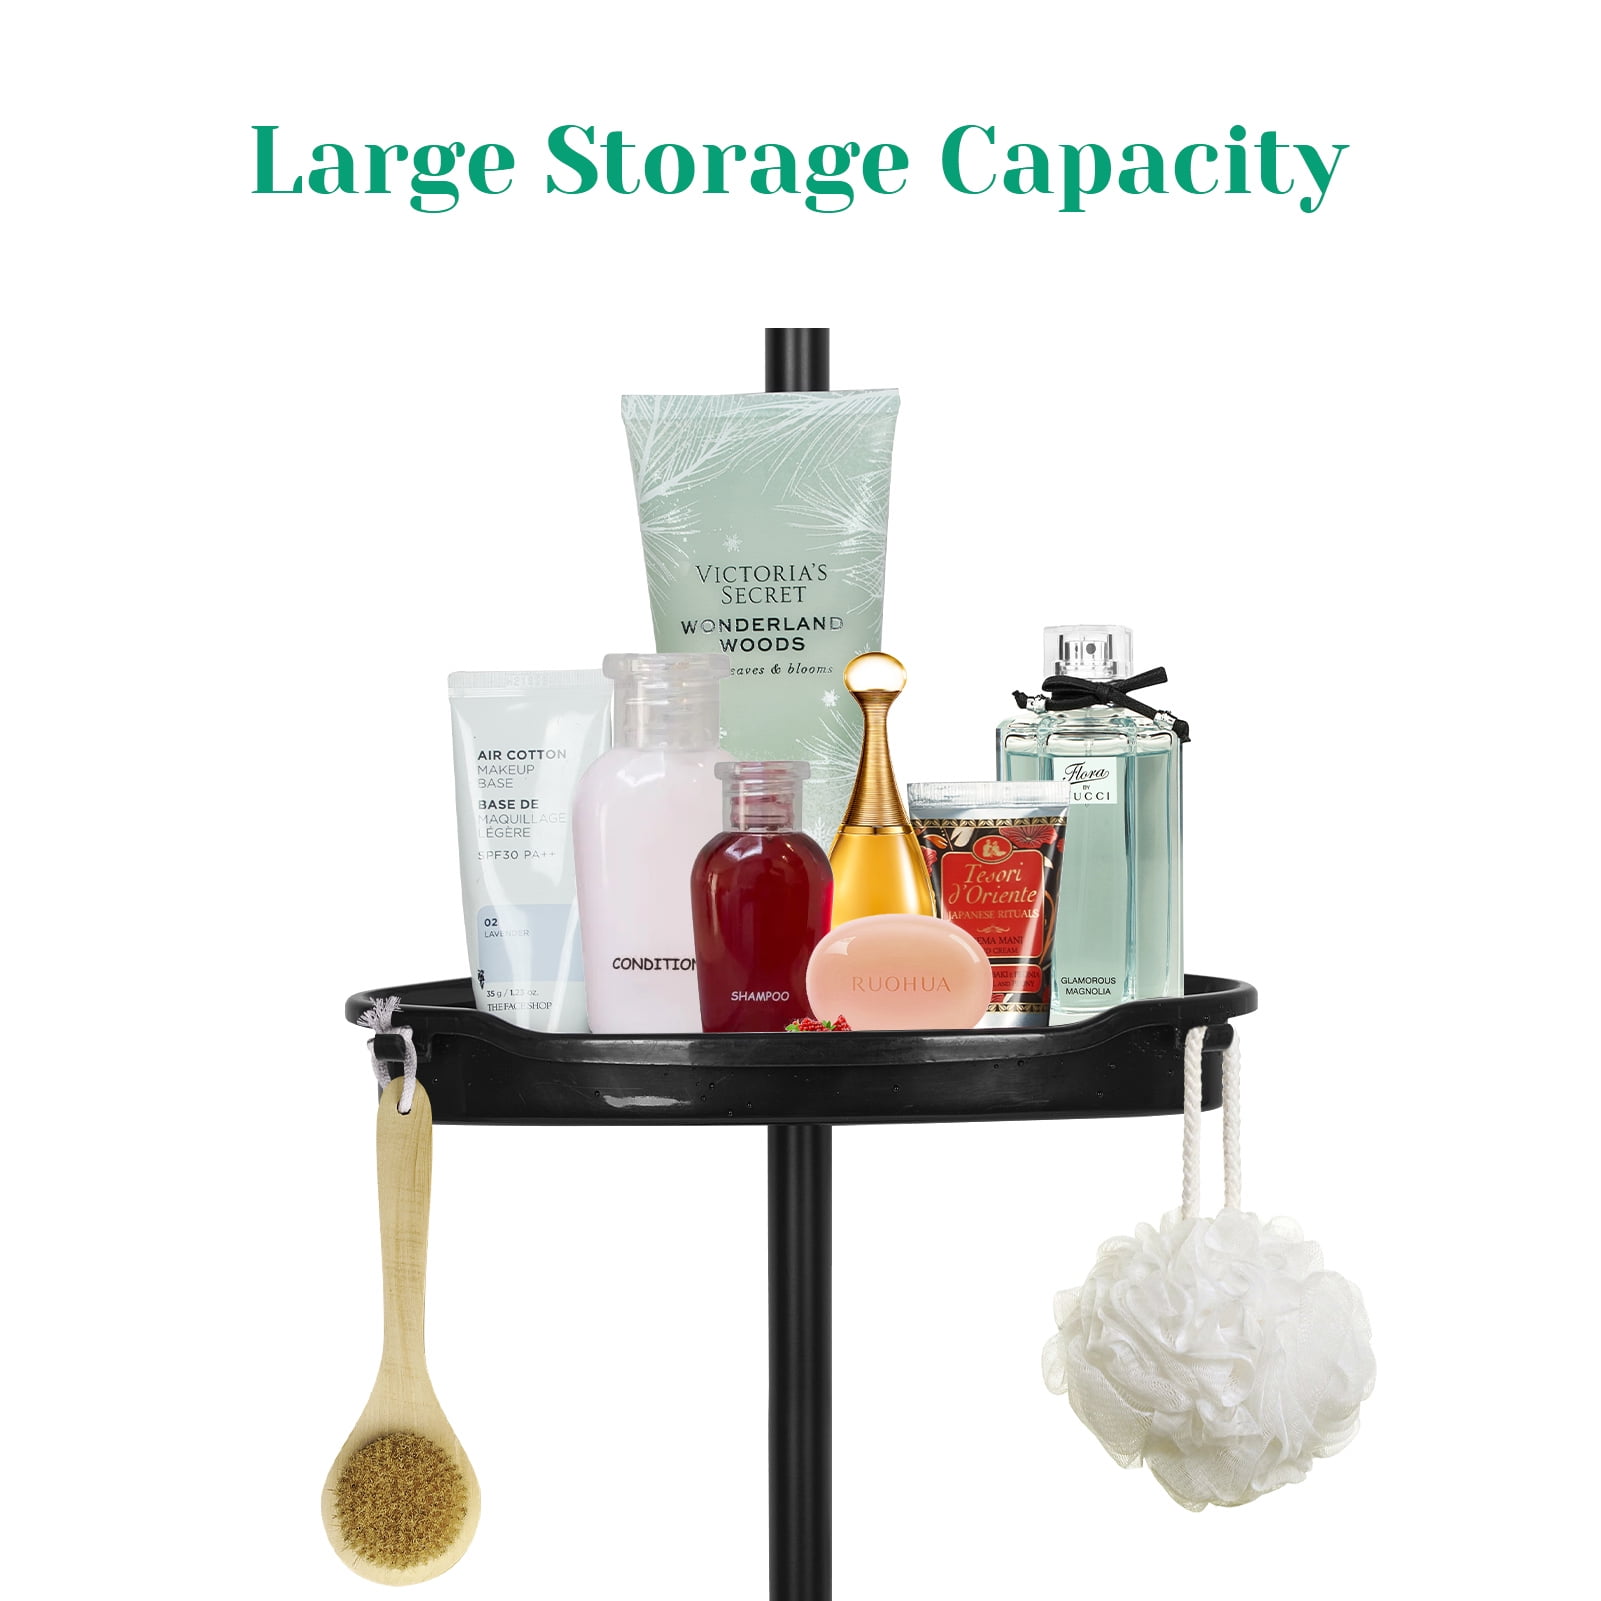 ADOVEL 4 Layer Corner Shower Caddy, Adjustable Shower Shelf